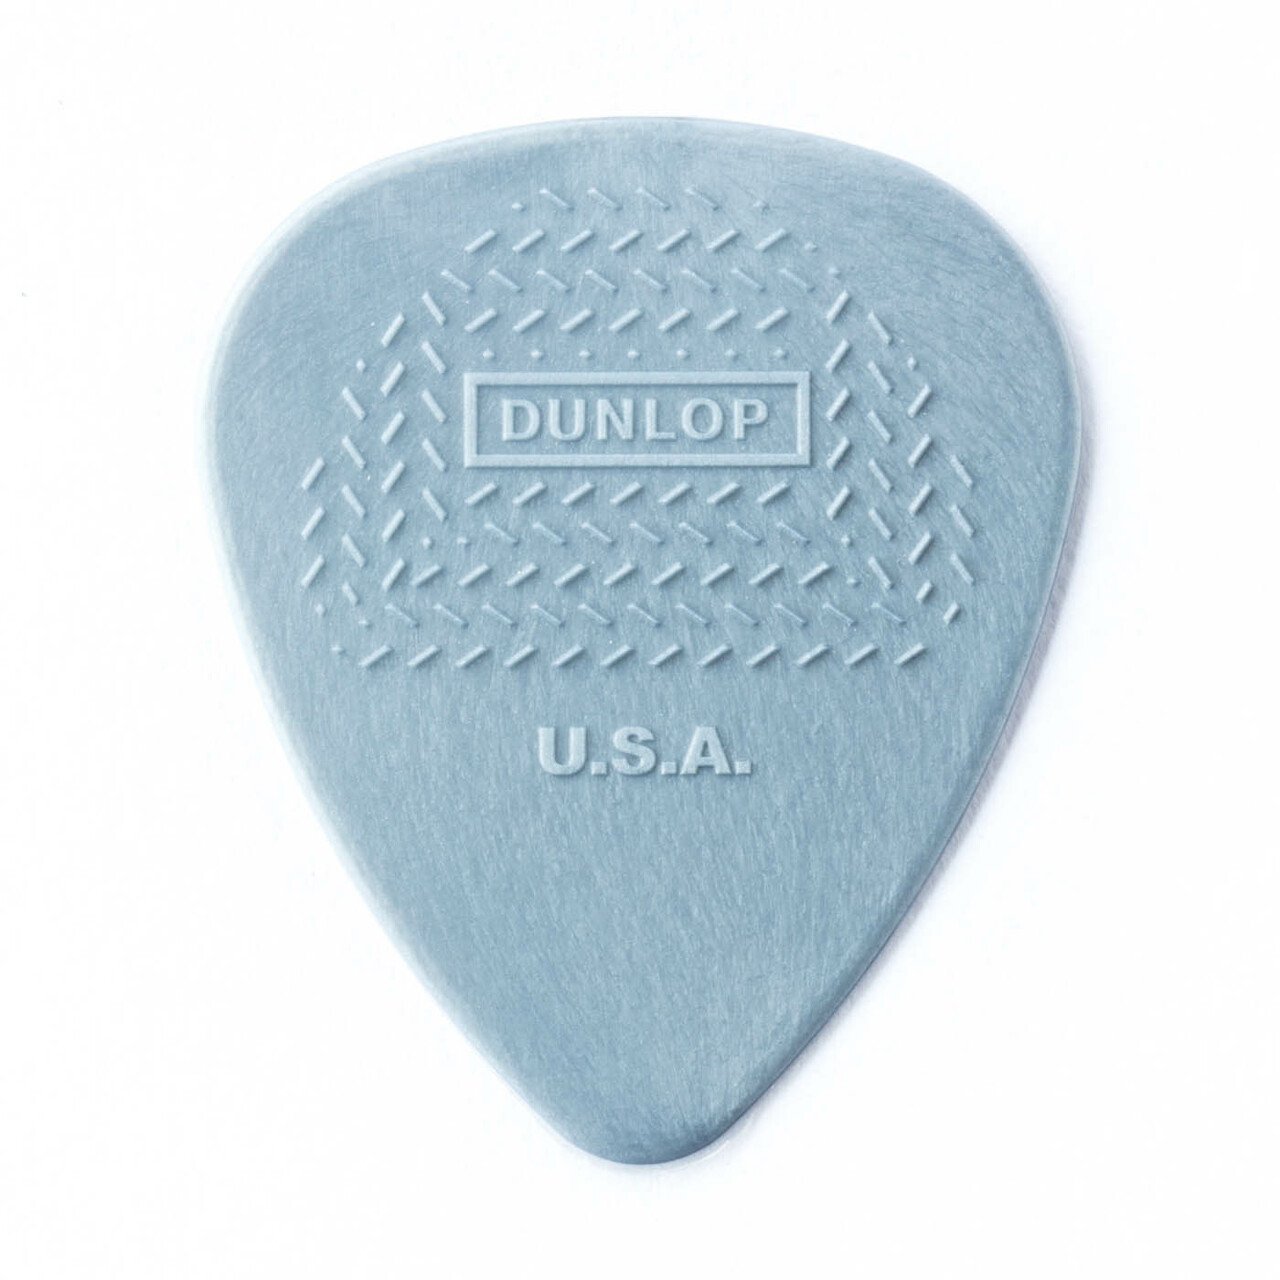 Dunlop 던롭 맥스그립 피크 스탠다드 0.6mm